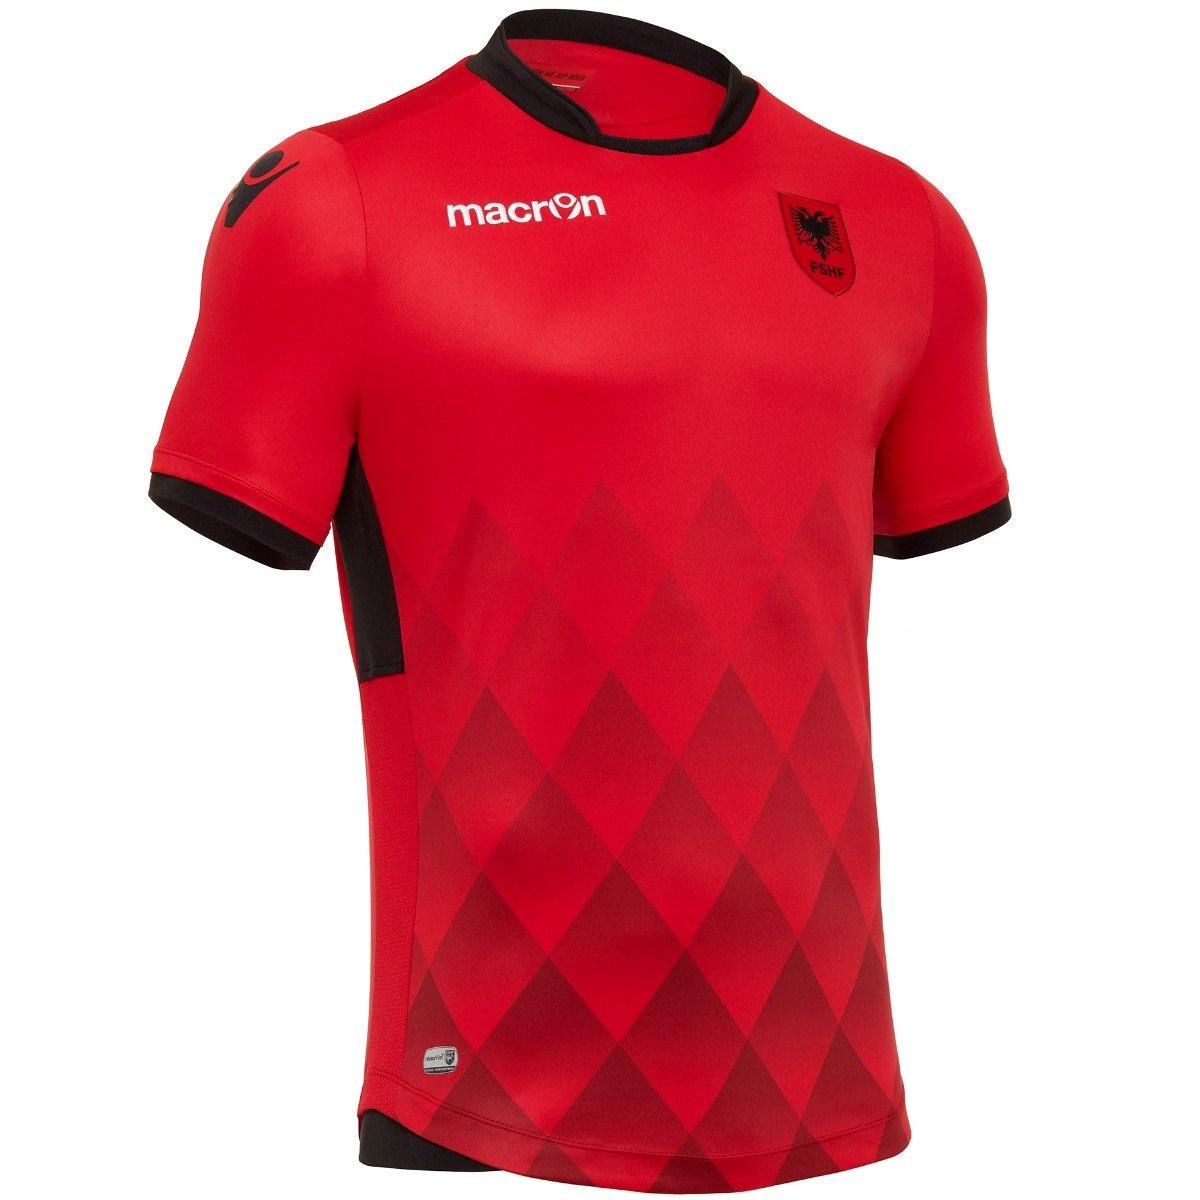 Albania national team Home soccer jersey 2016/17 Macron